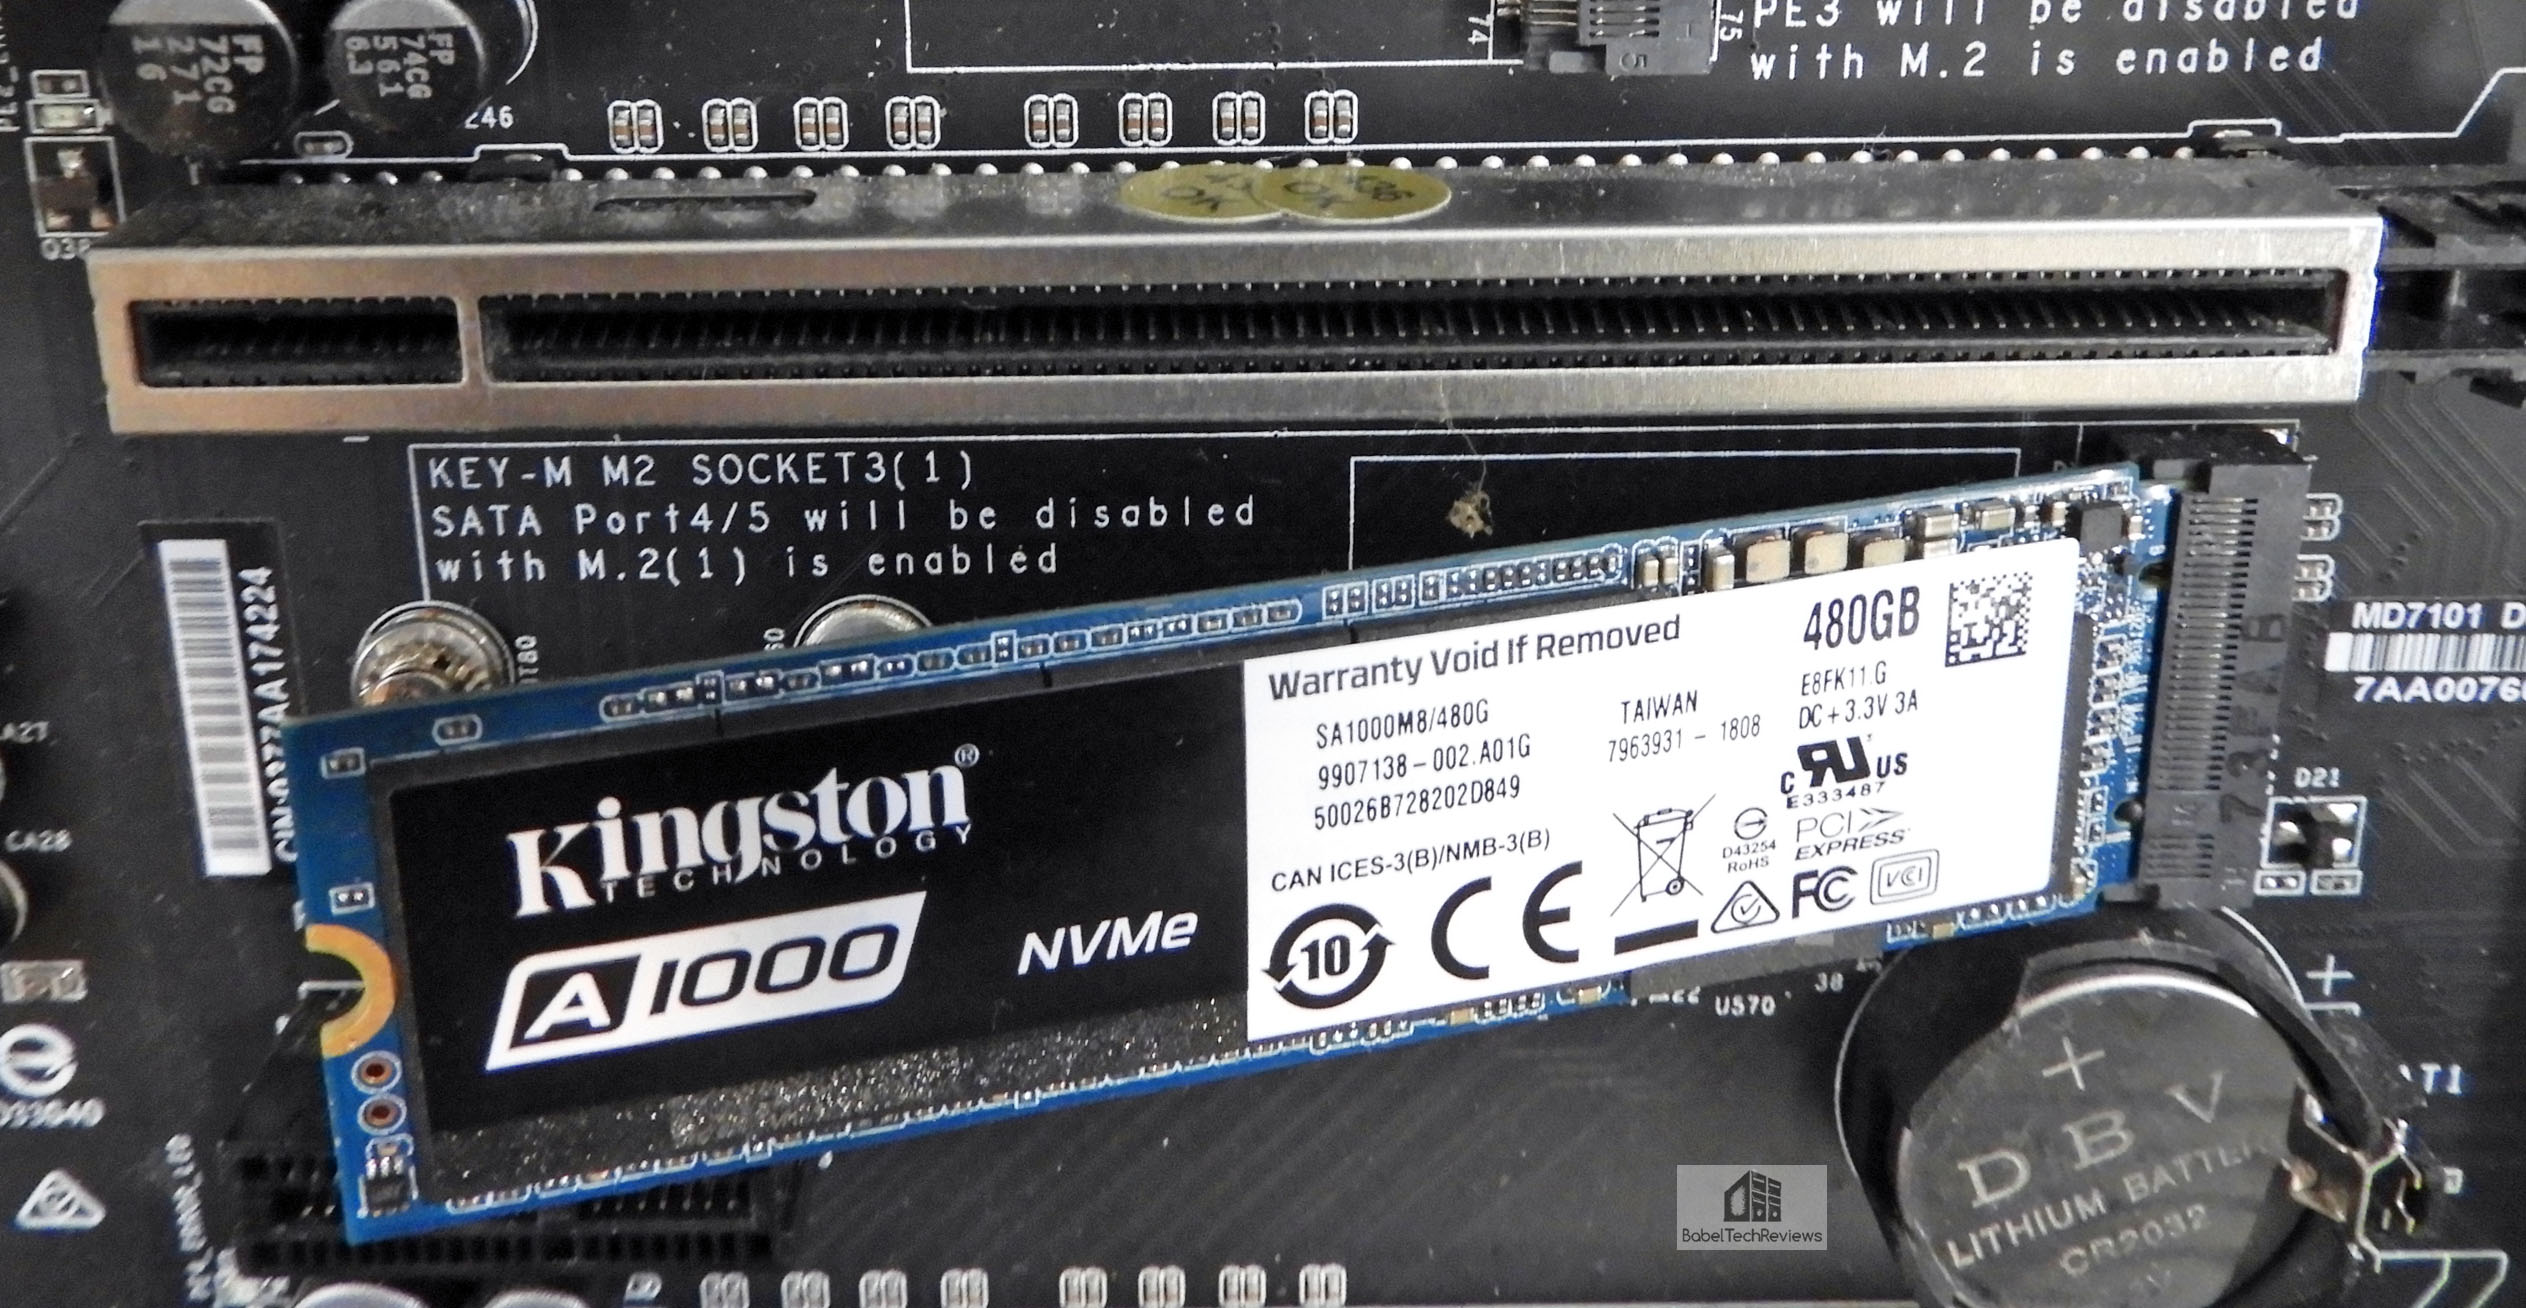 The Kingston A1000 NVMe 480 GB SSD review